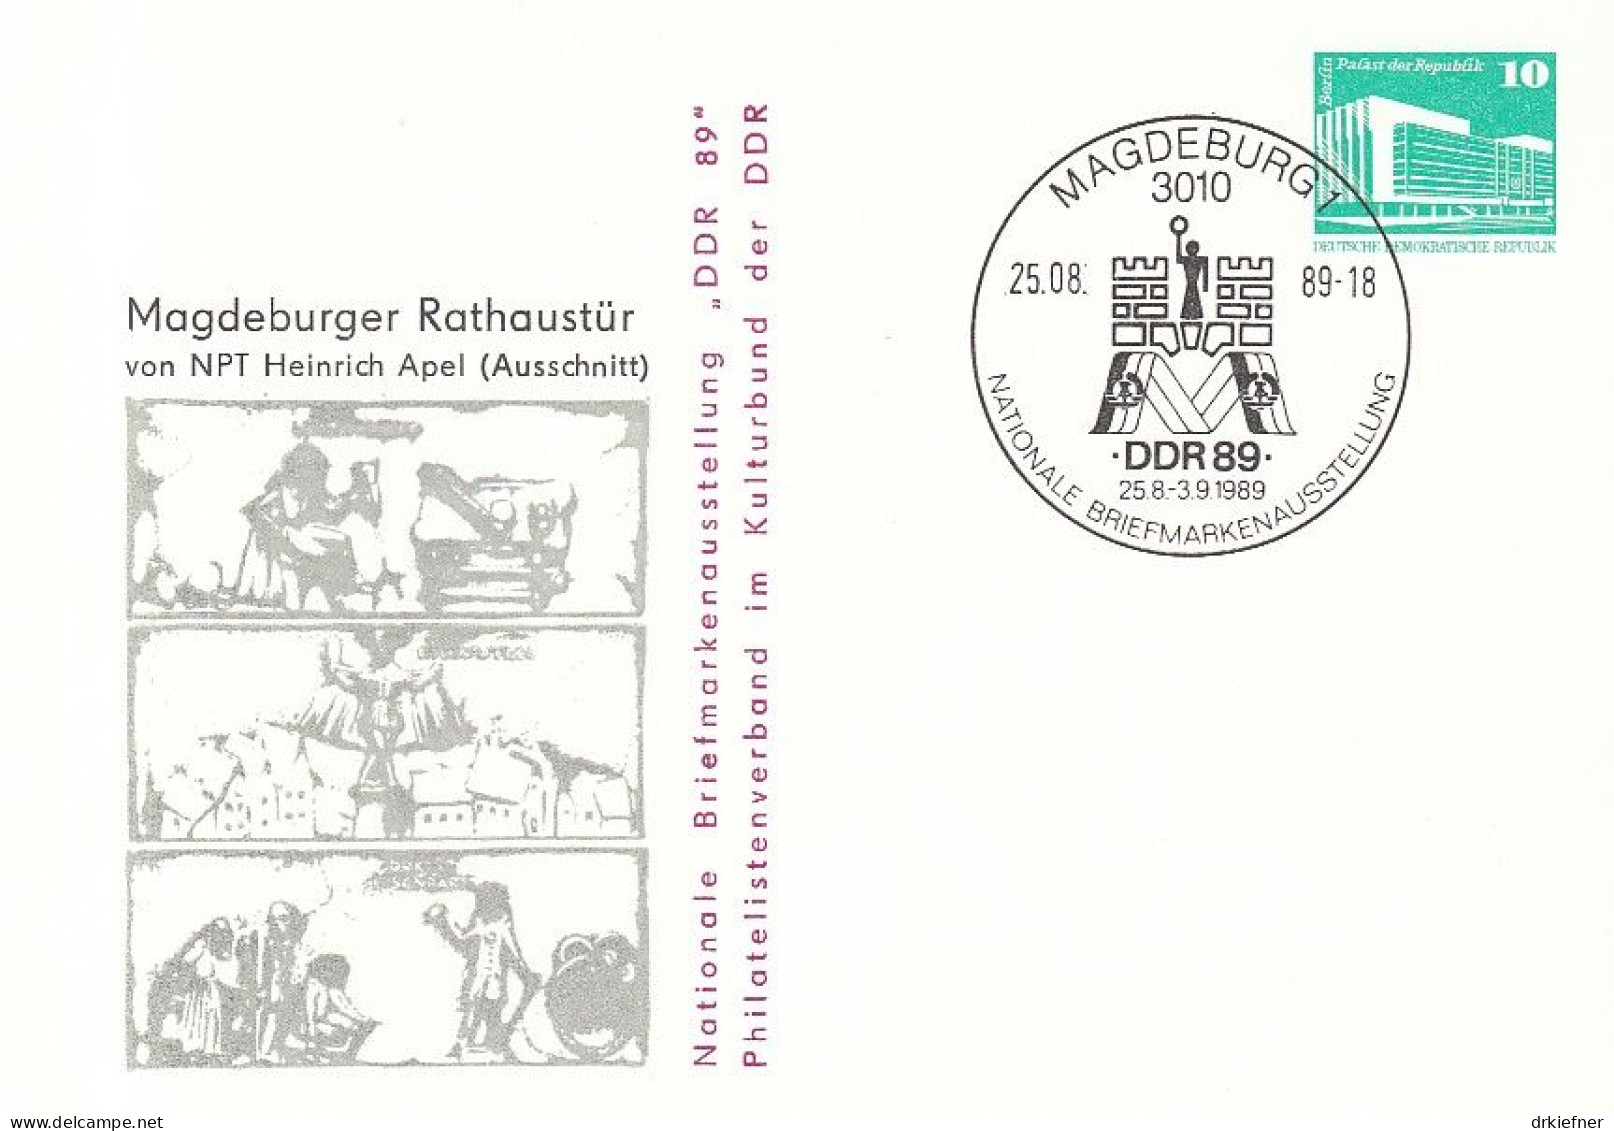 DDR PP 18, Gebraucht, SoSt: Magdeburg 25.8.89, Briefmarkenausstellung DDR '89, Magdeburger Rathaustür, 1989 - Private Postcards - Used